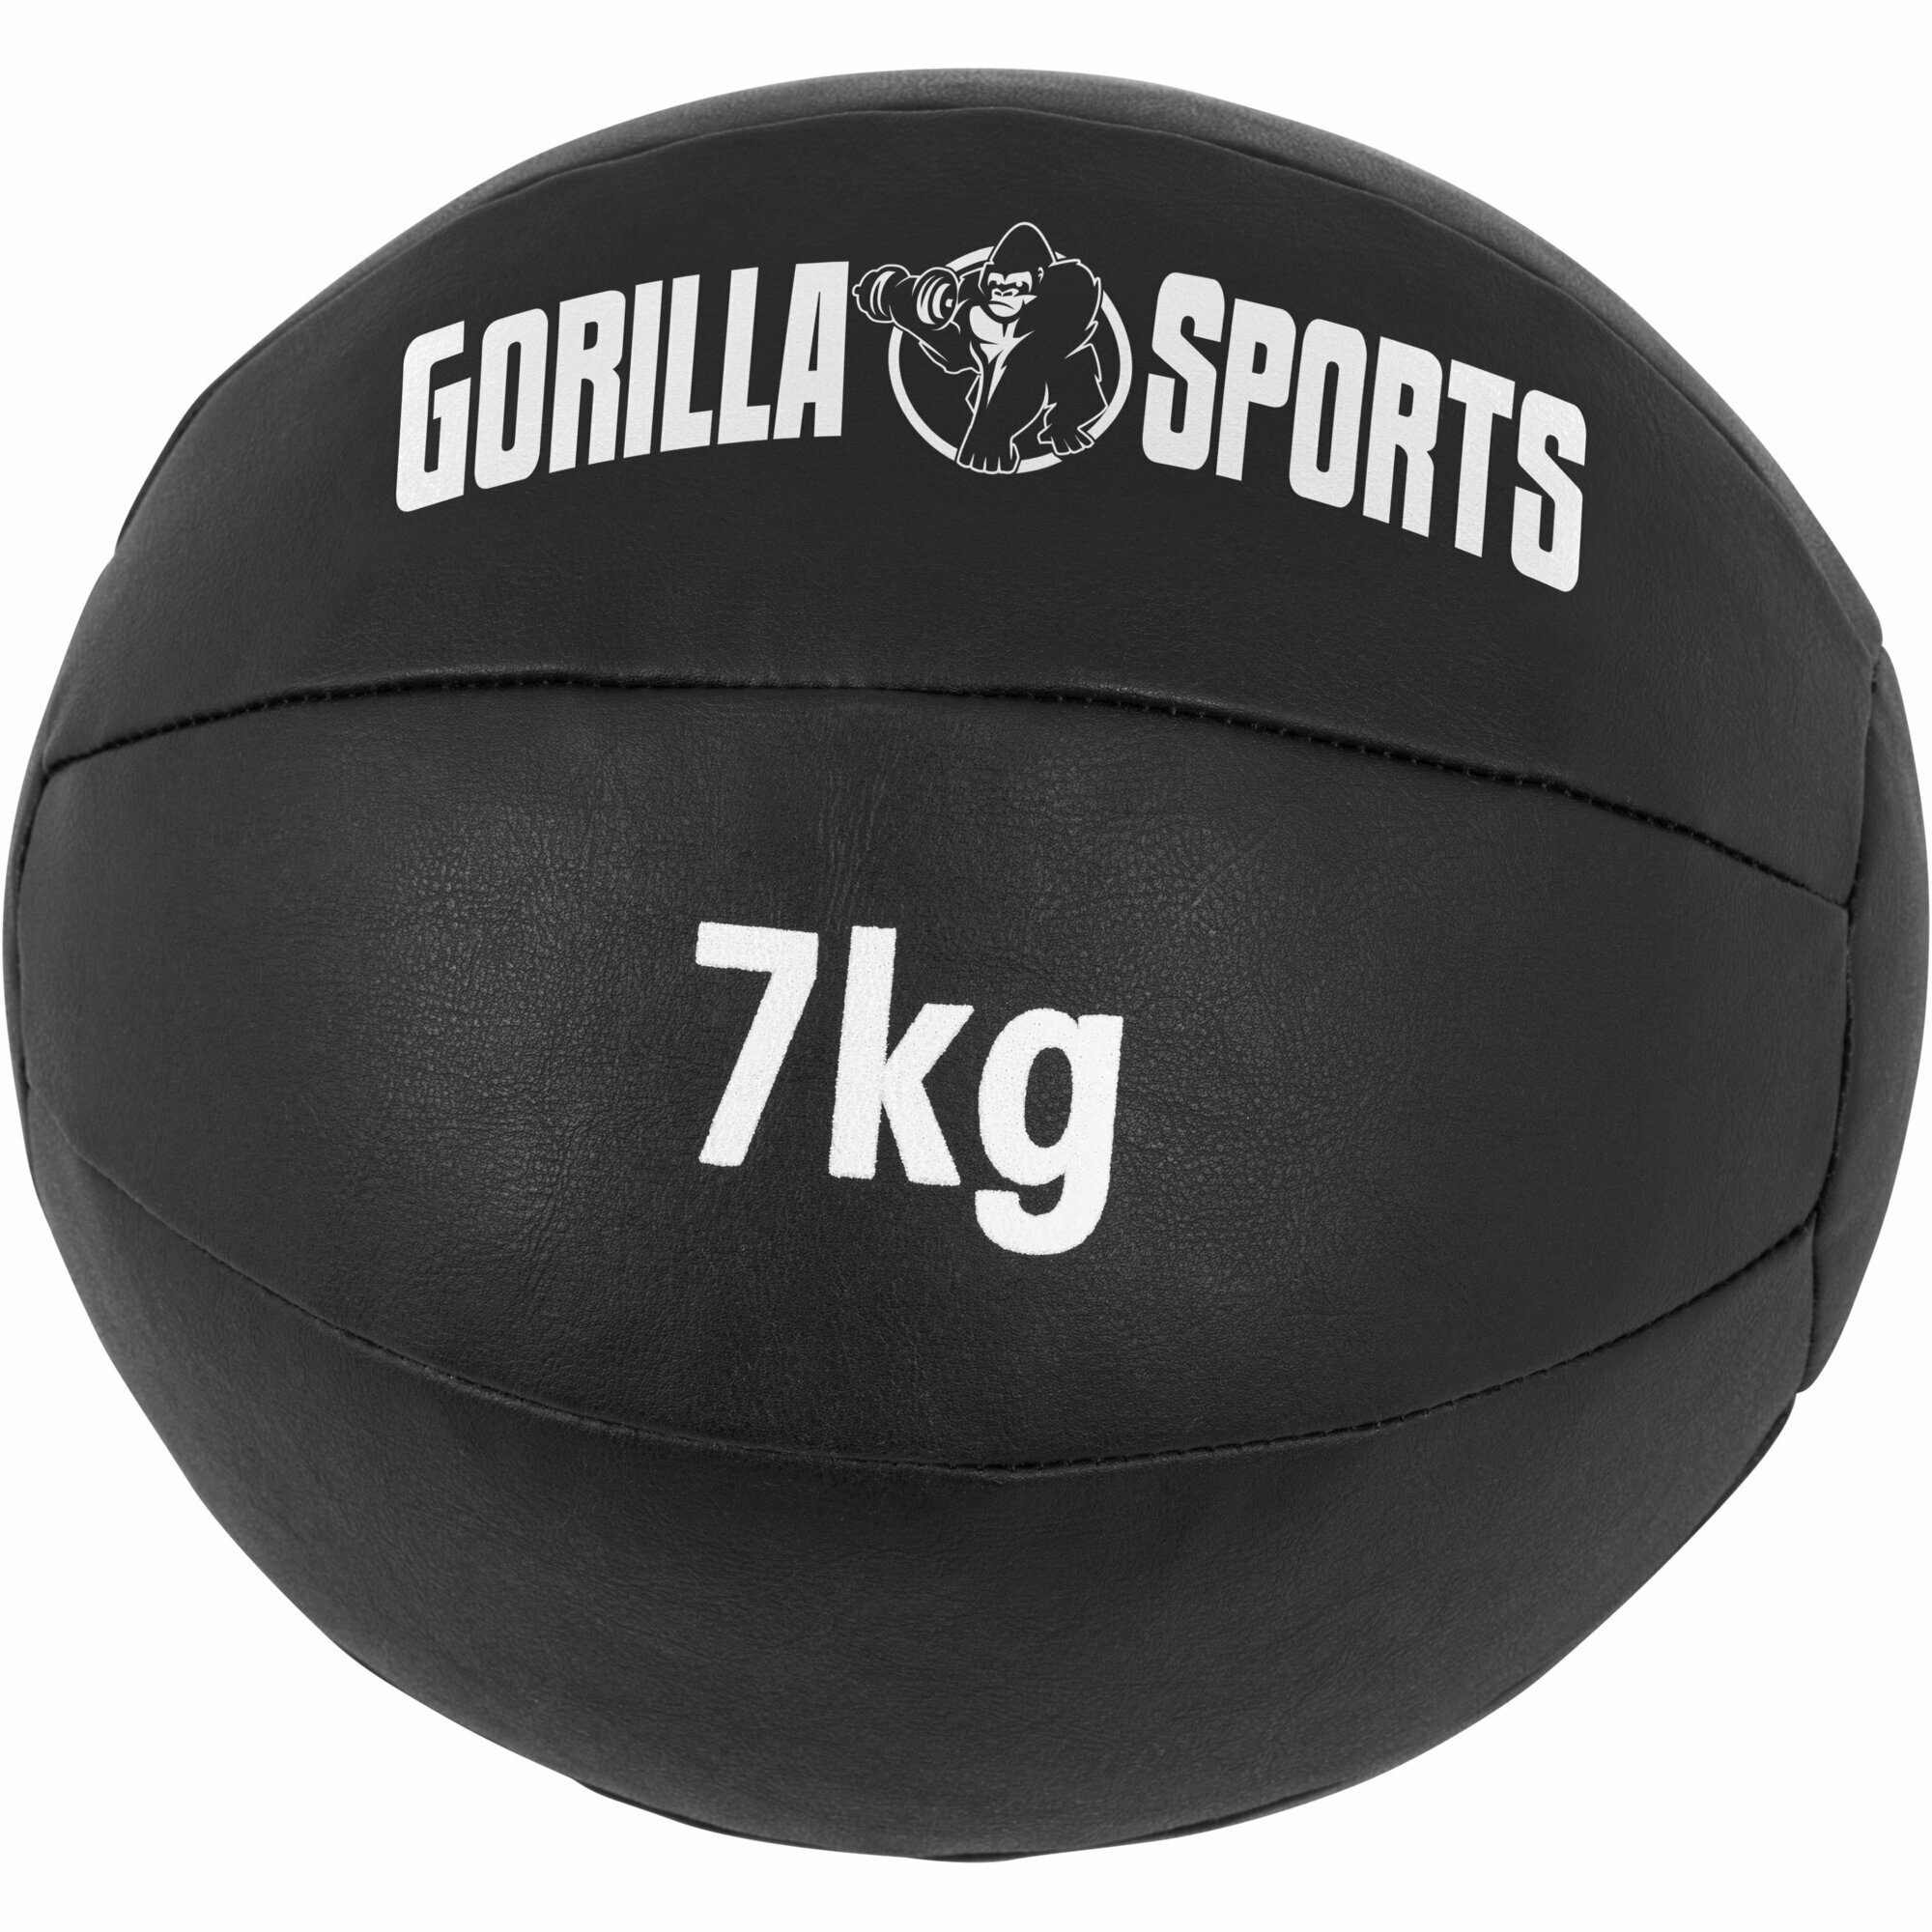 GORILLA SPORTS Medizinball Einzeln/Set, 29cm, aus Leder, Trainingsball, Fitnessball, Gewichtsball 7 kg